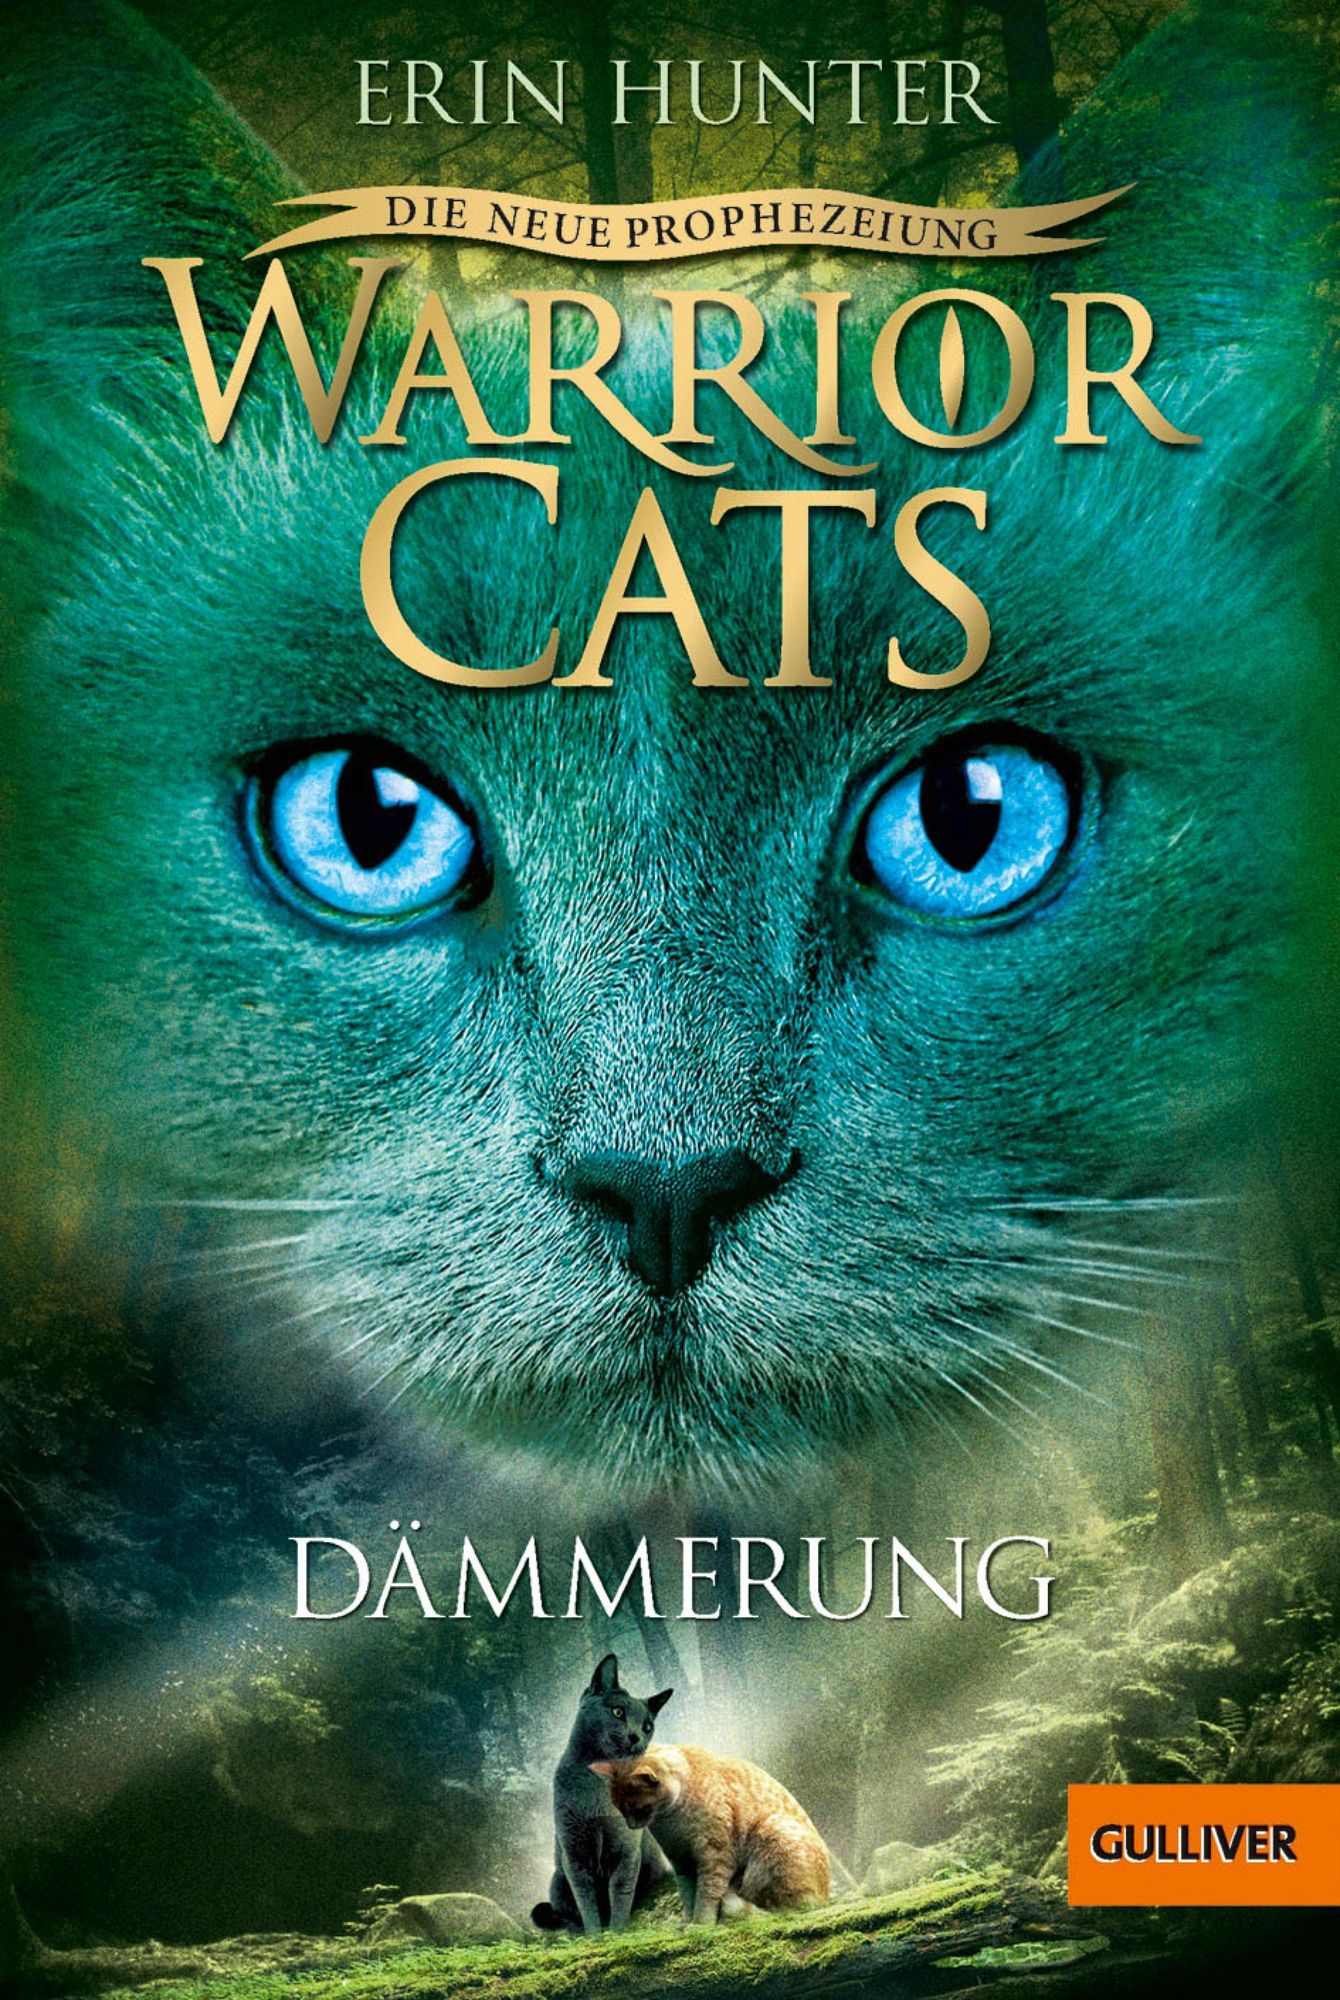 Staffel II » Warrior Cats